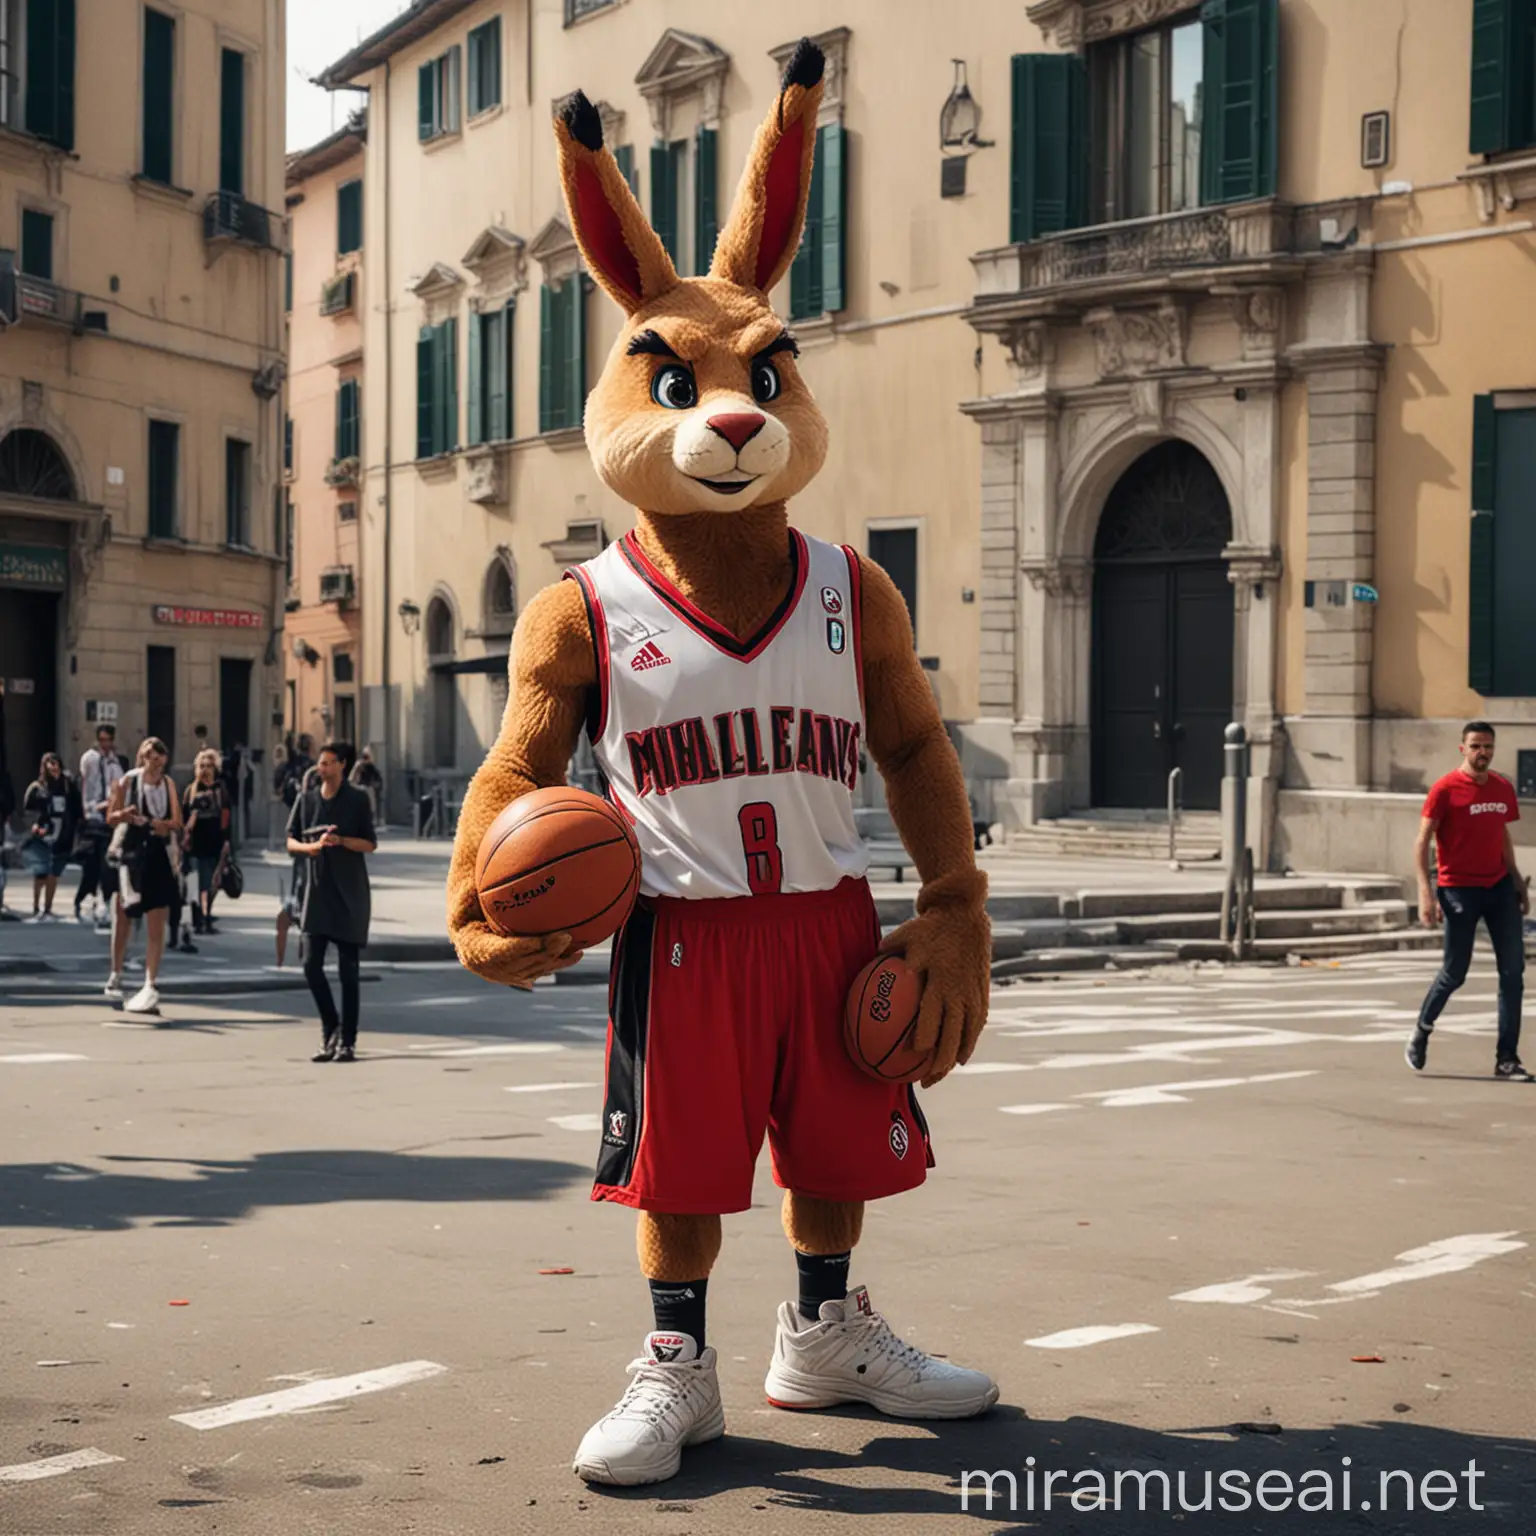 Make a Milan mascot for basketball